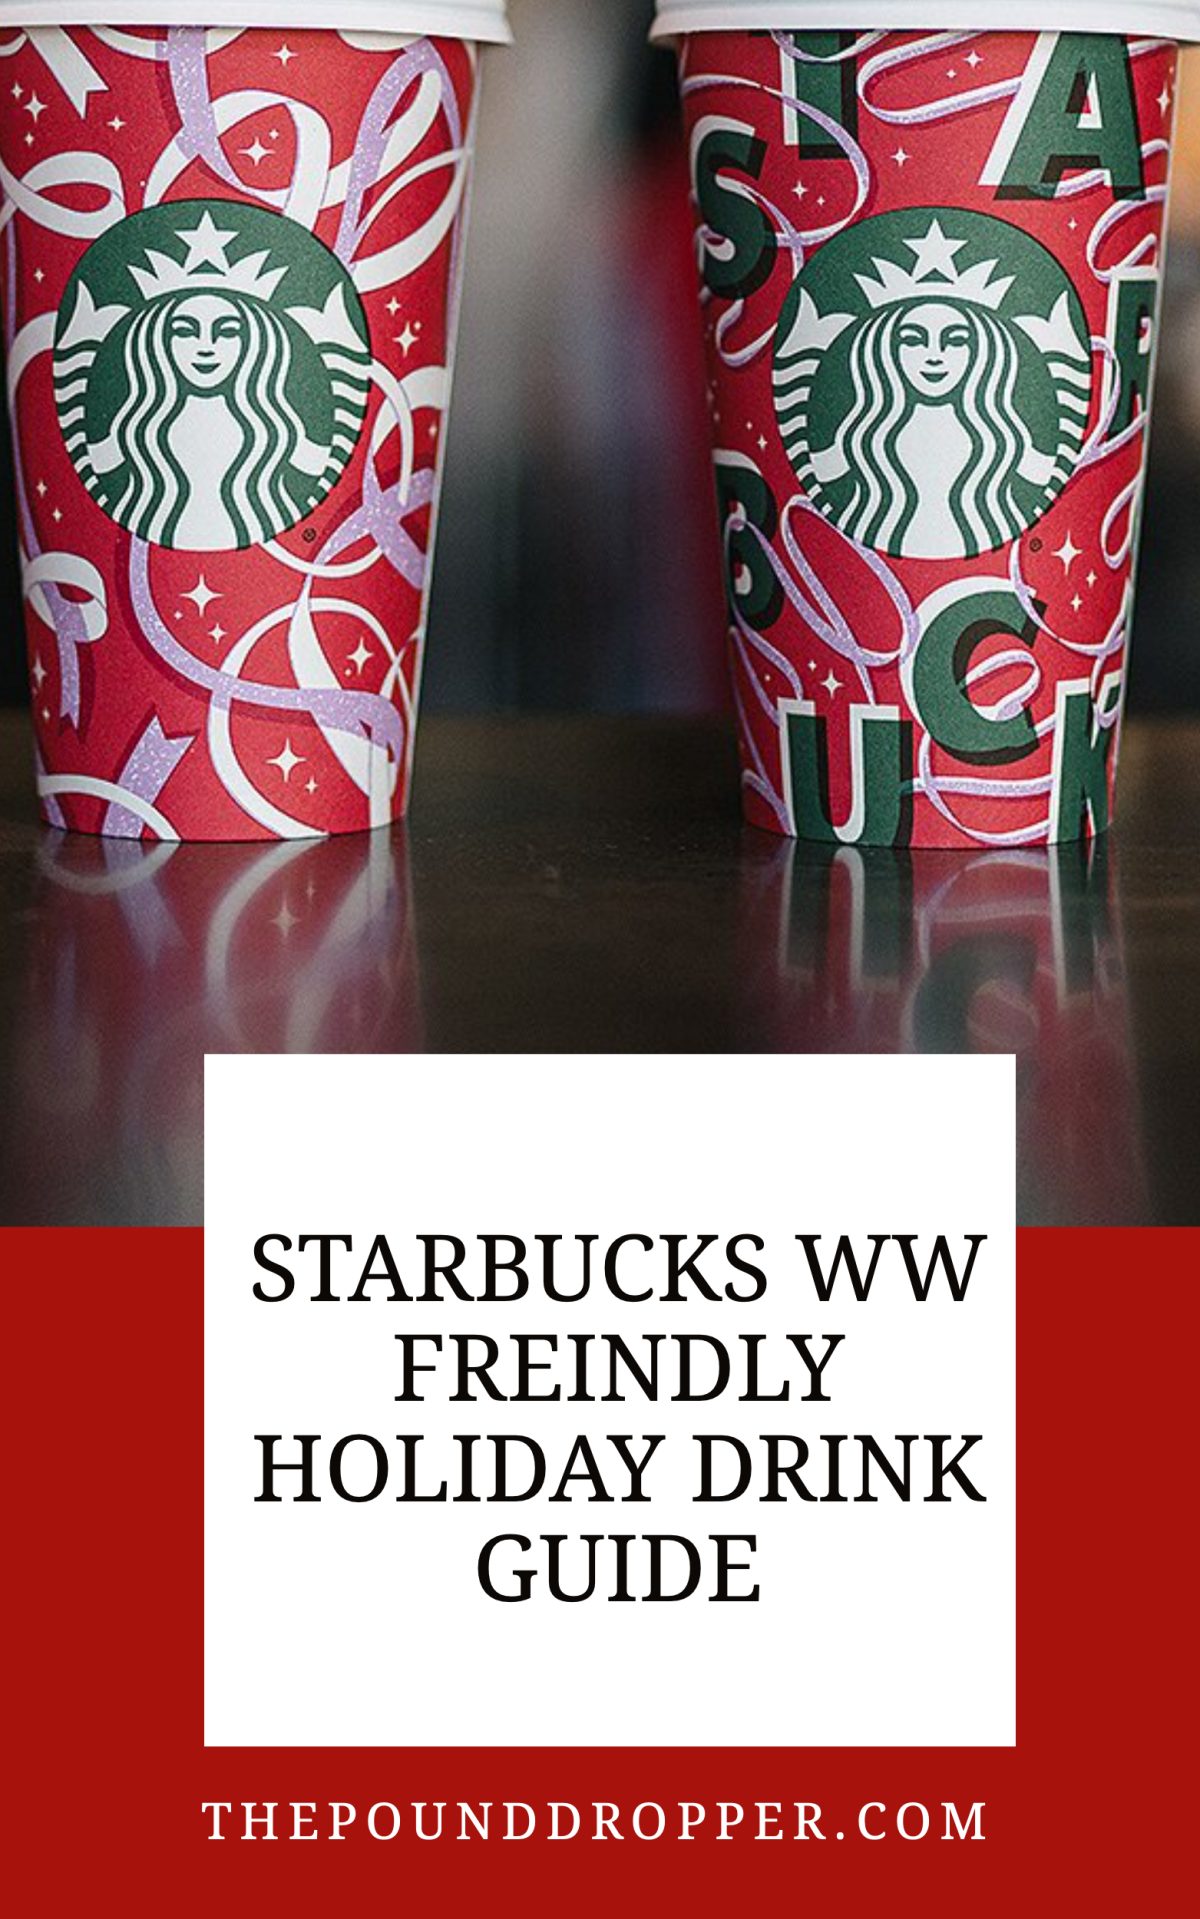 Starbucks WW Friendly Holiday Drink Guide via @pounddropper